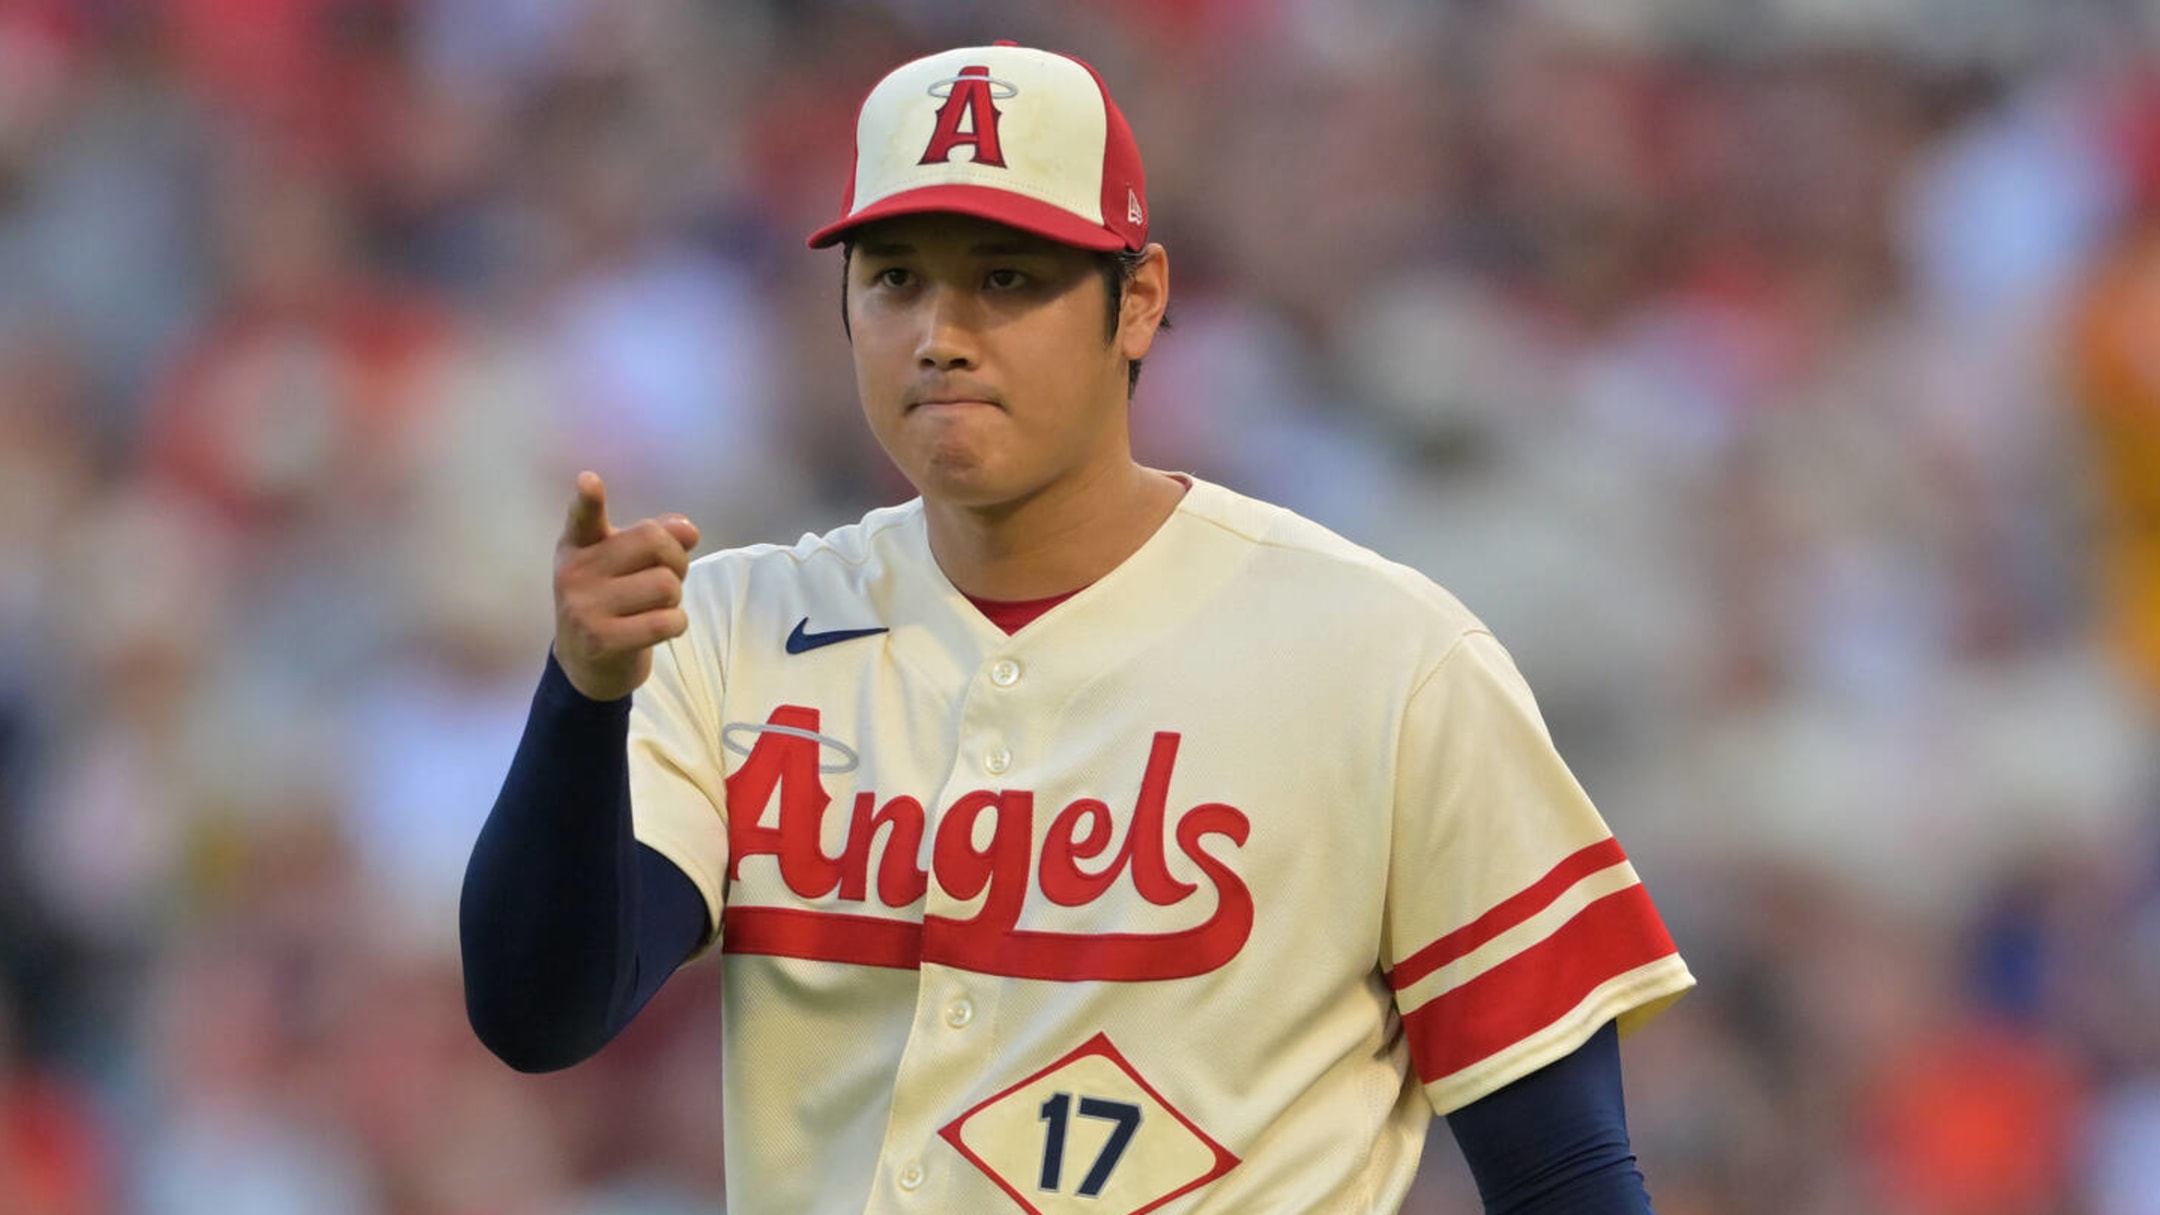 Los Angeles Angels pitcher, Shohei Ohtani wears a Ducks jersey